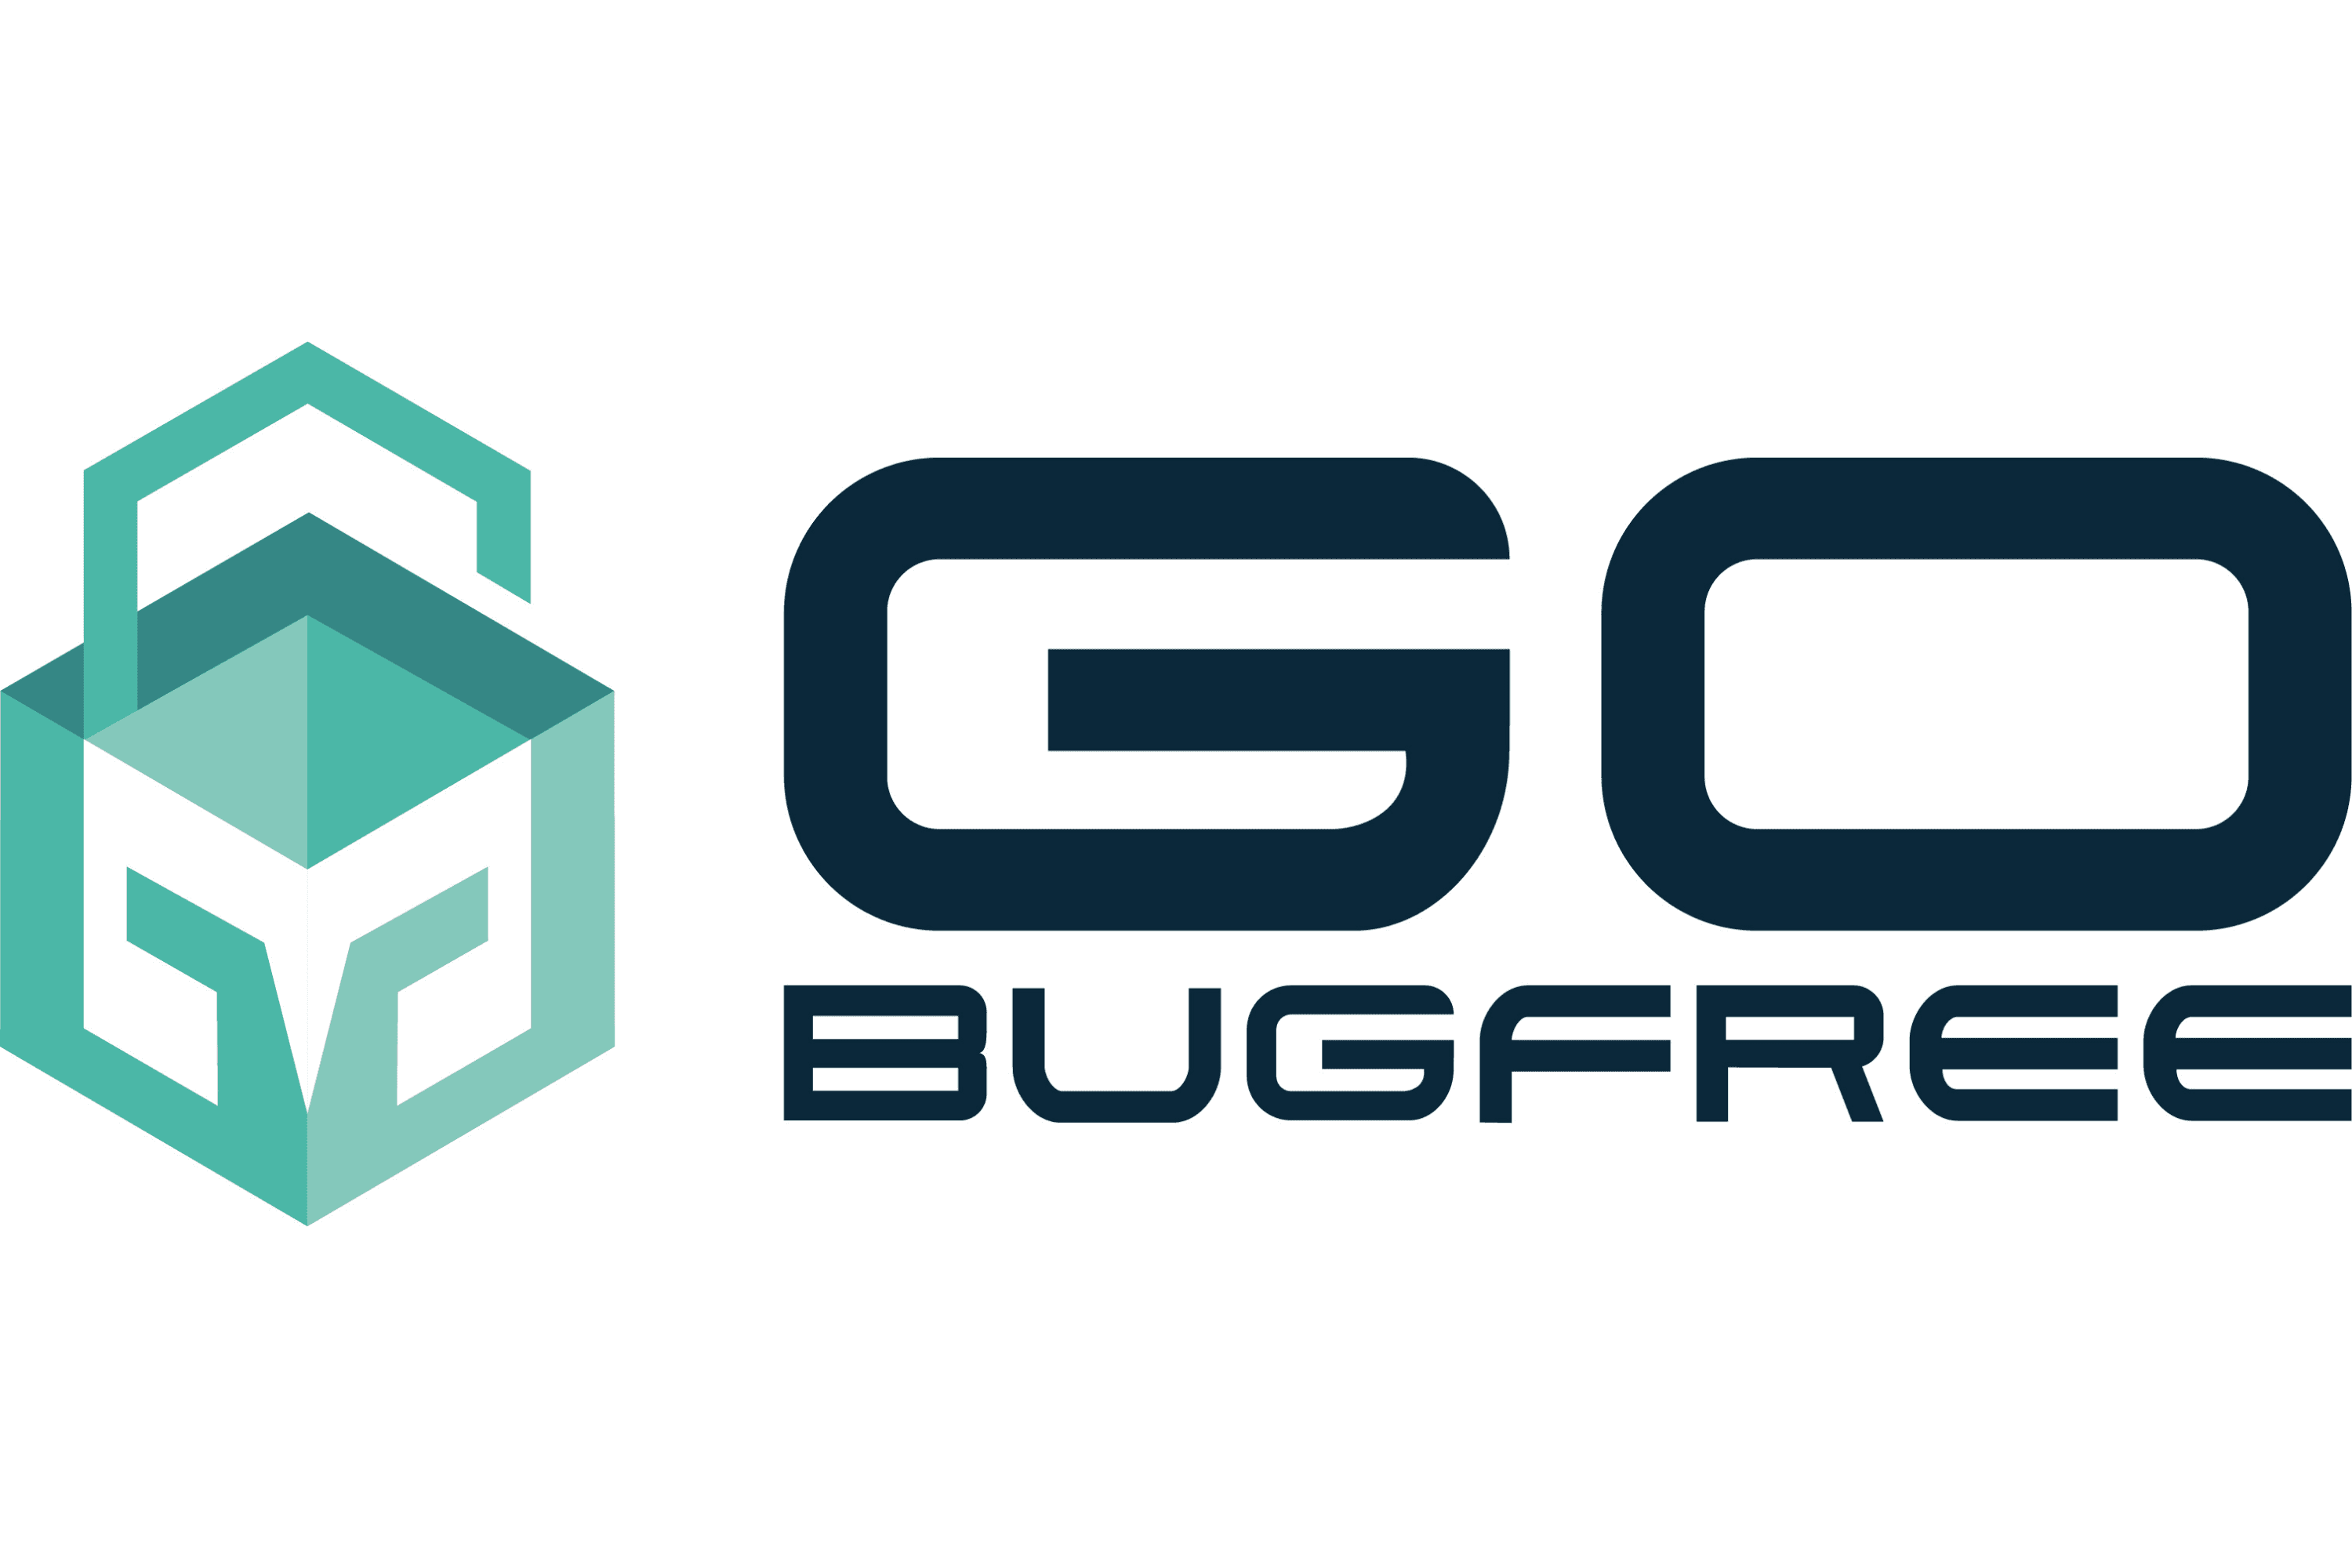 GBF_logo-downloads.png